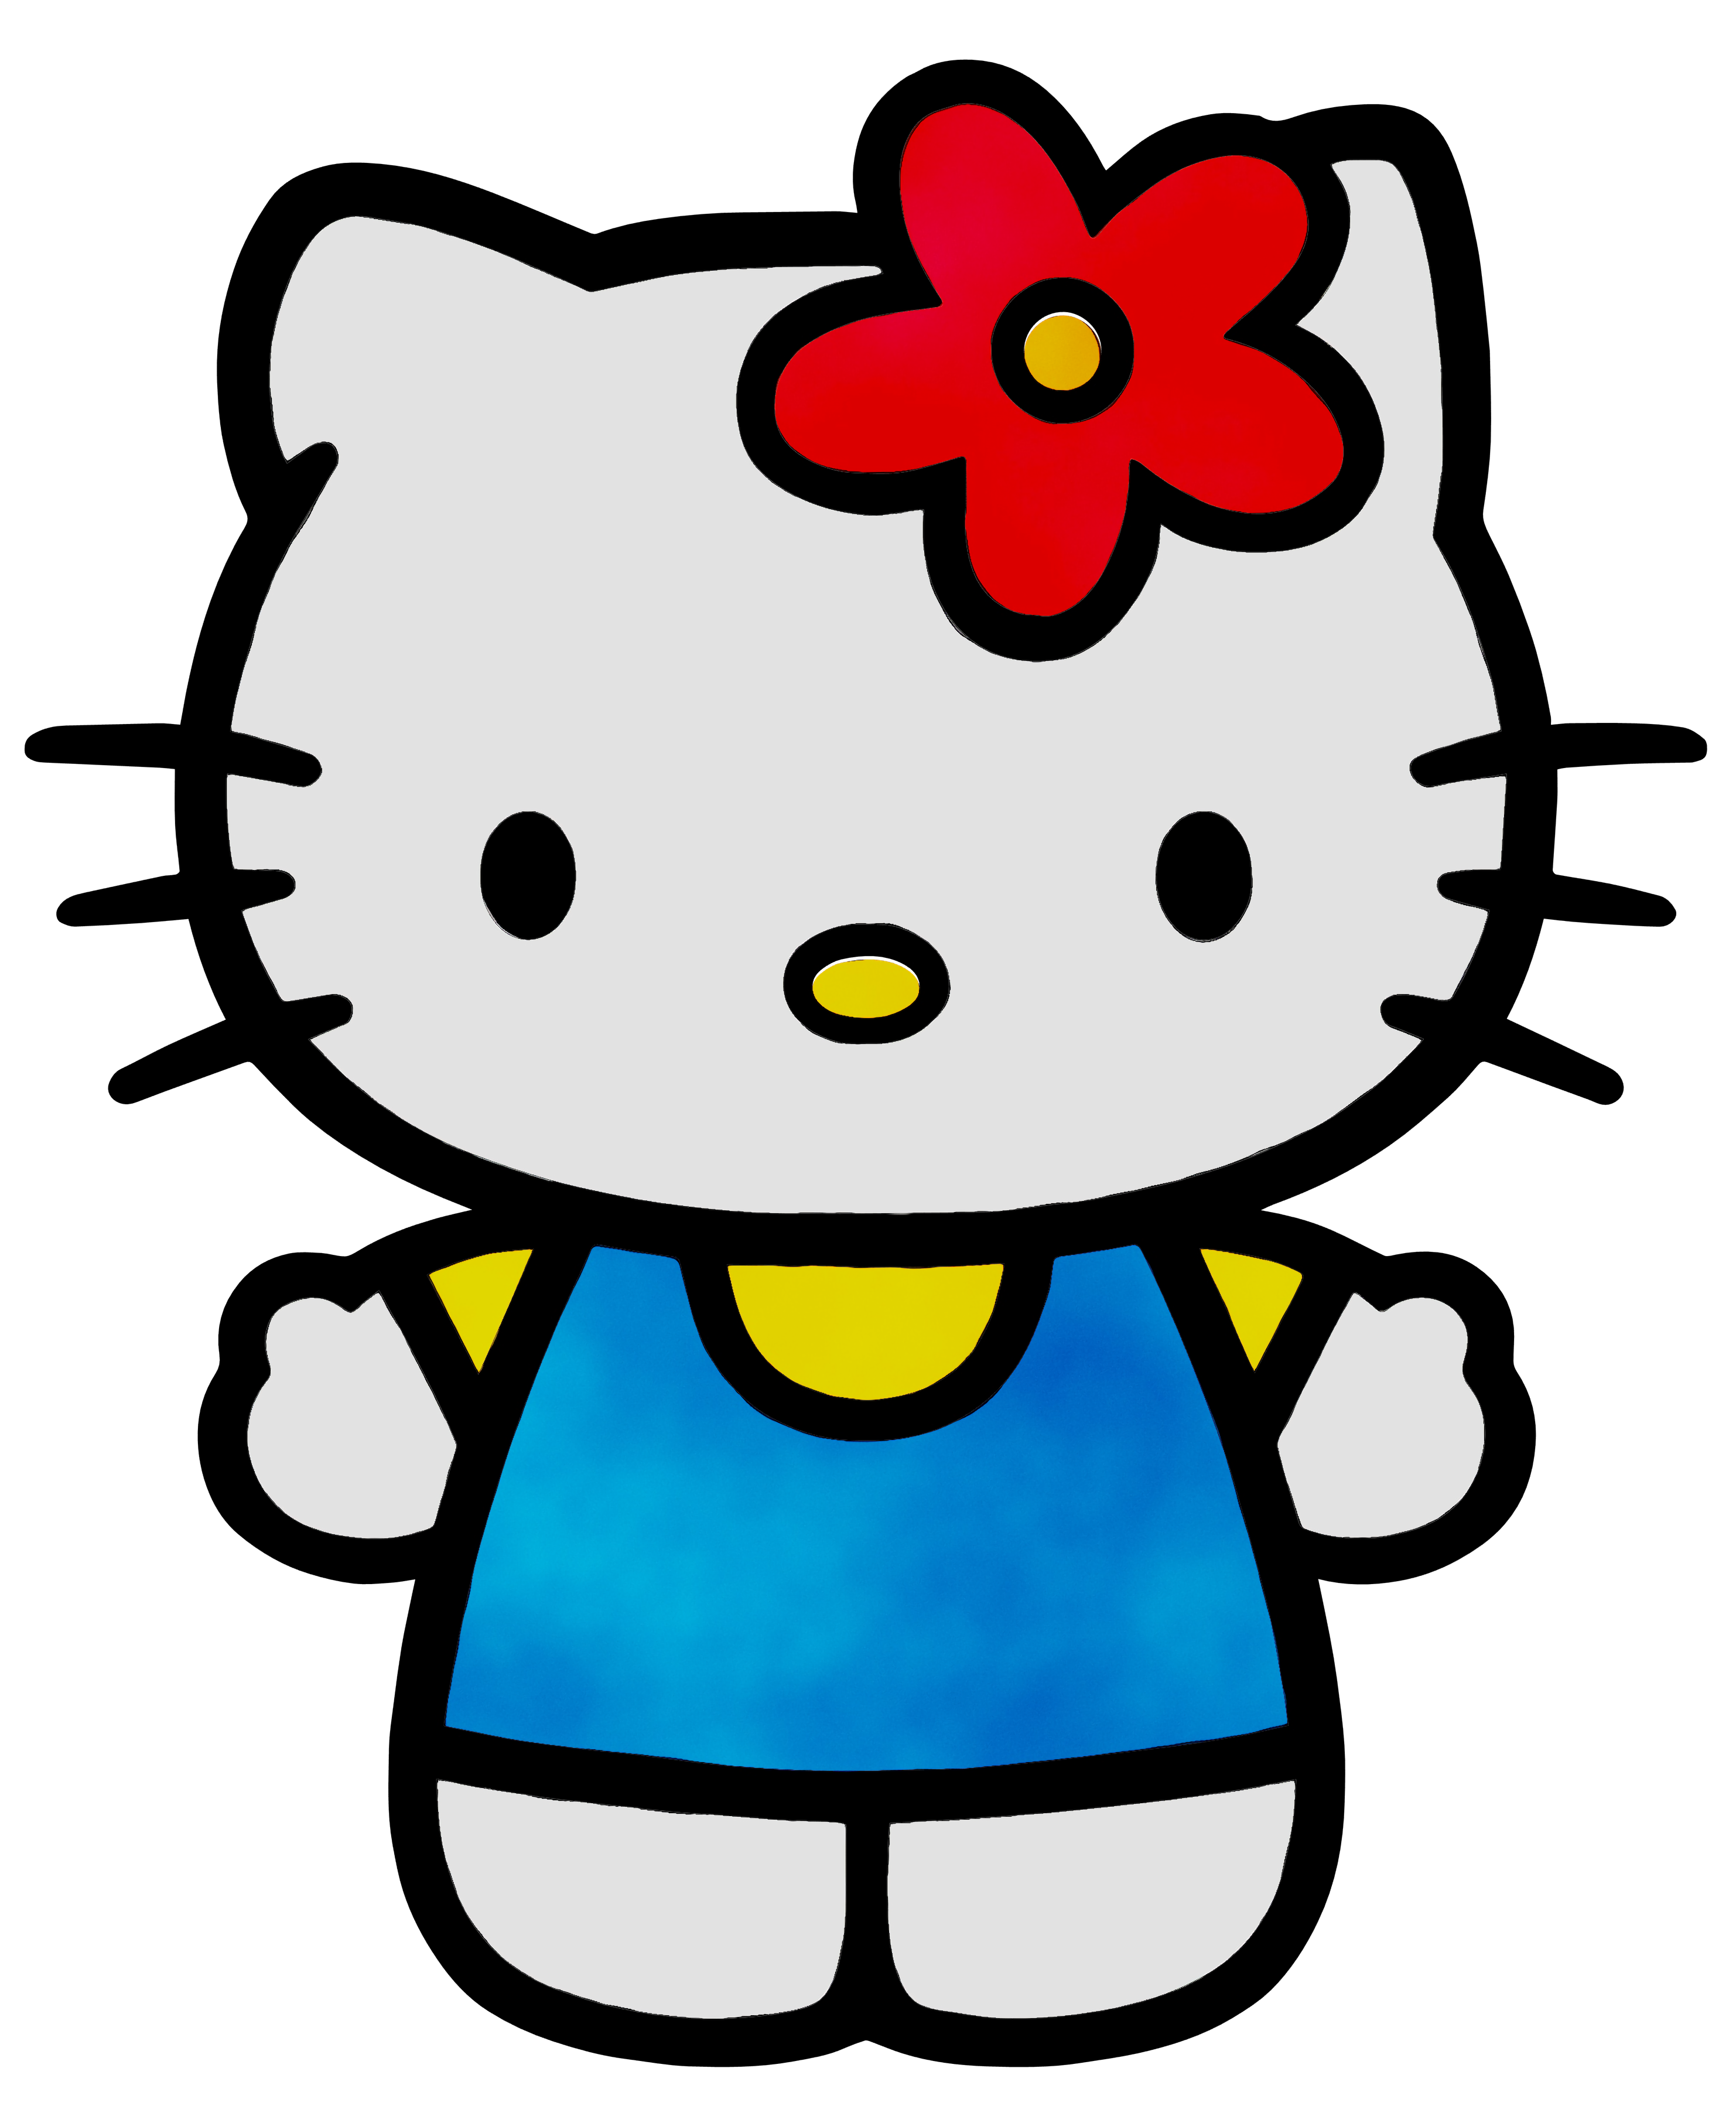 Hello Kitty Games - Play Online Games on Desura